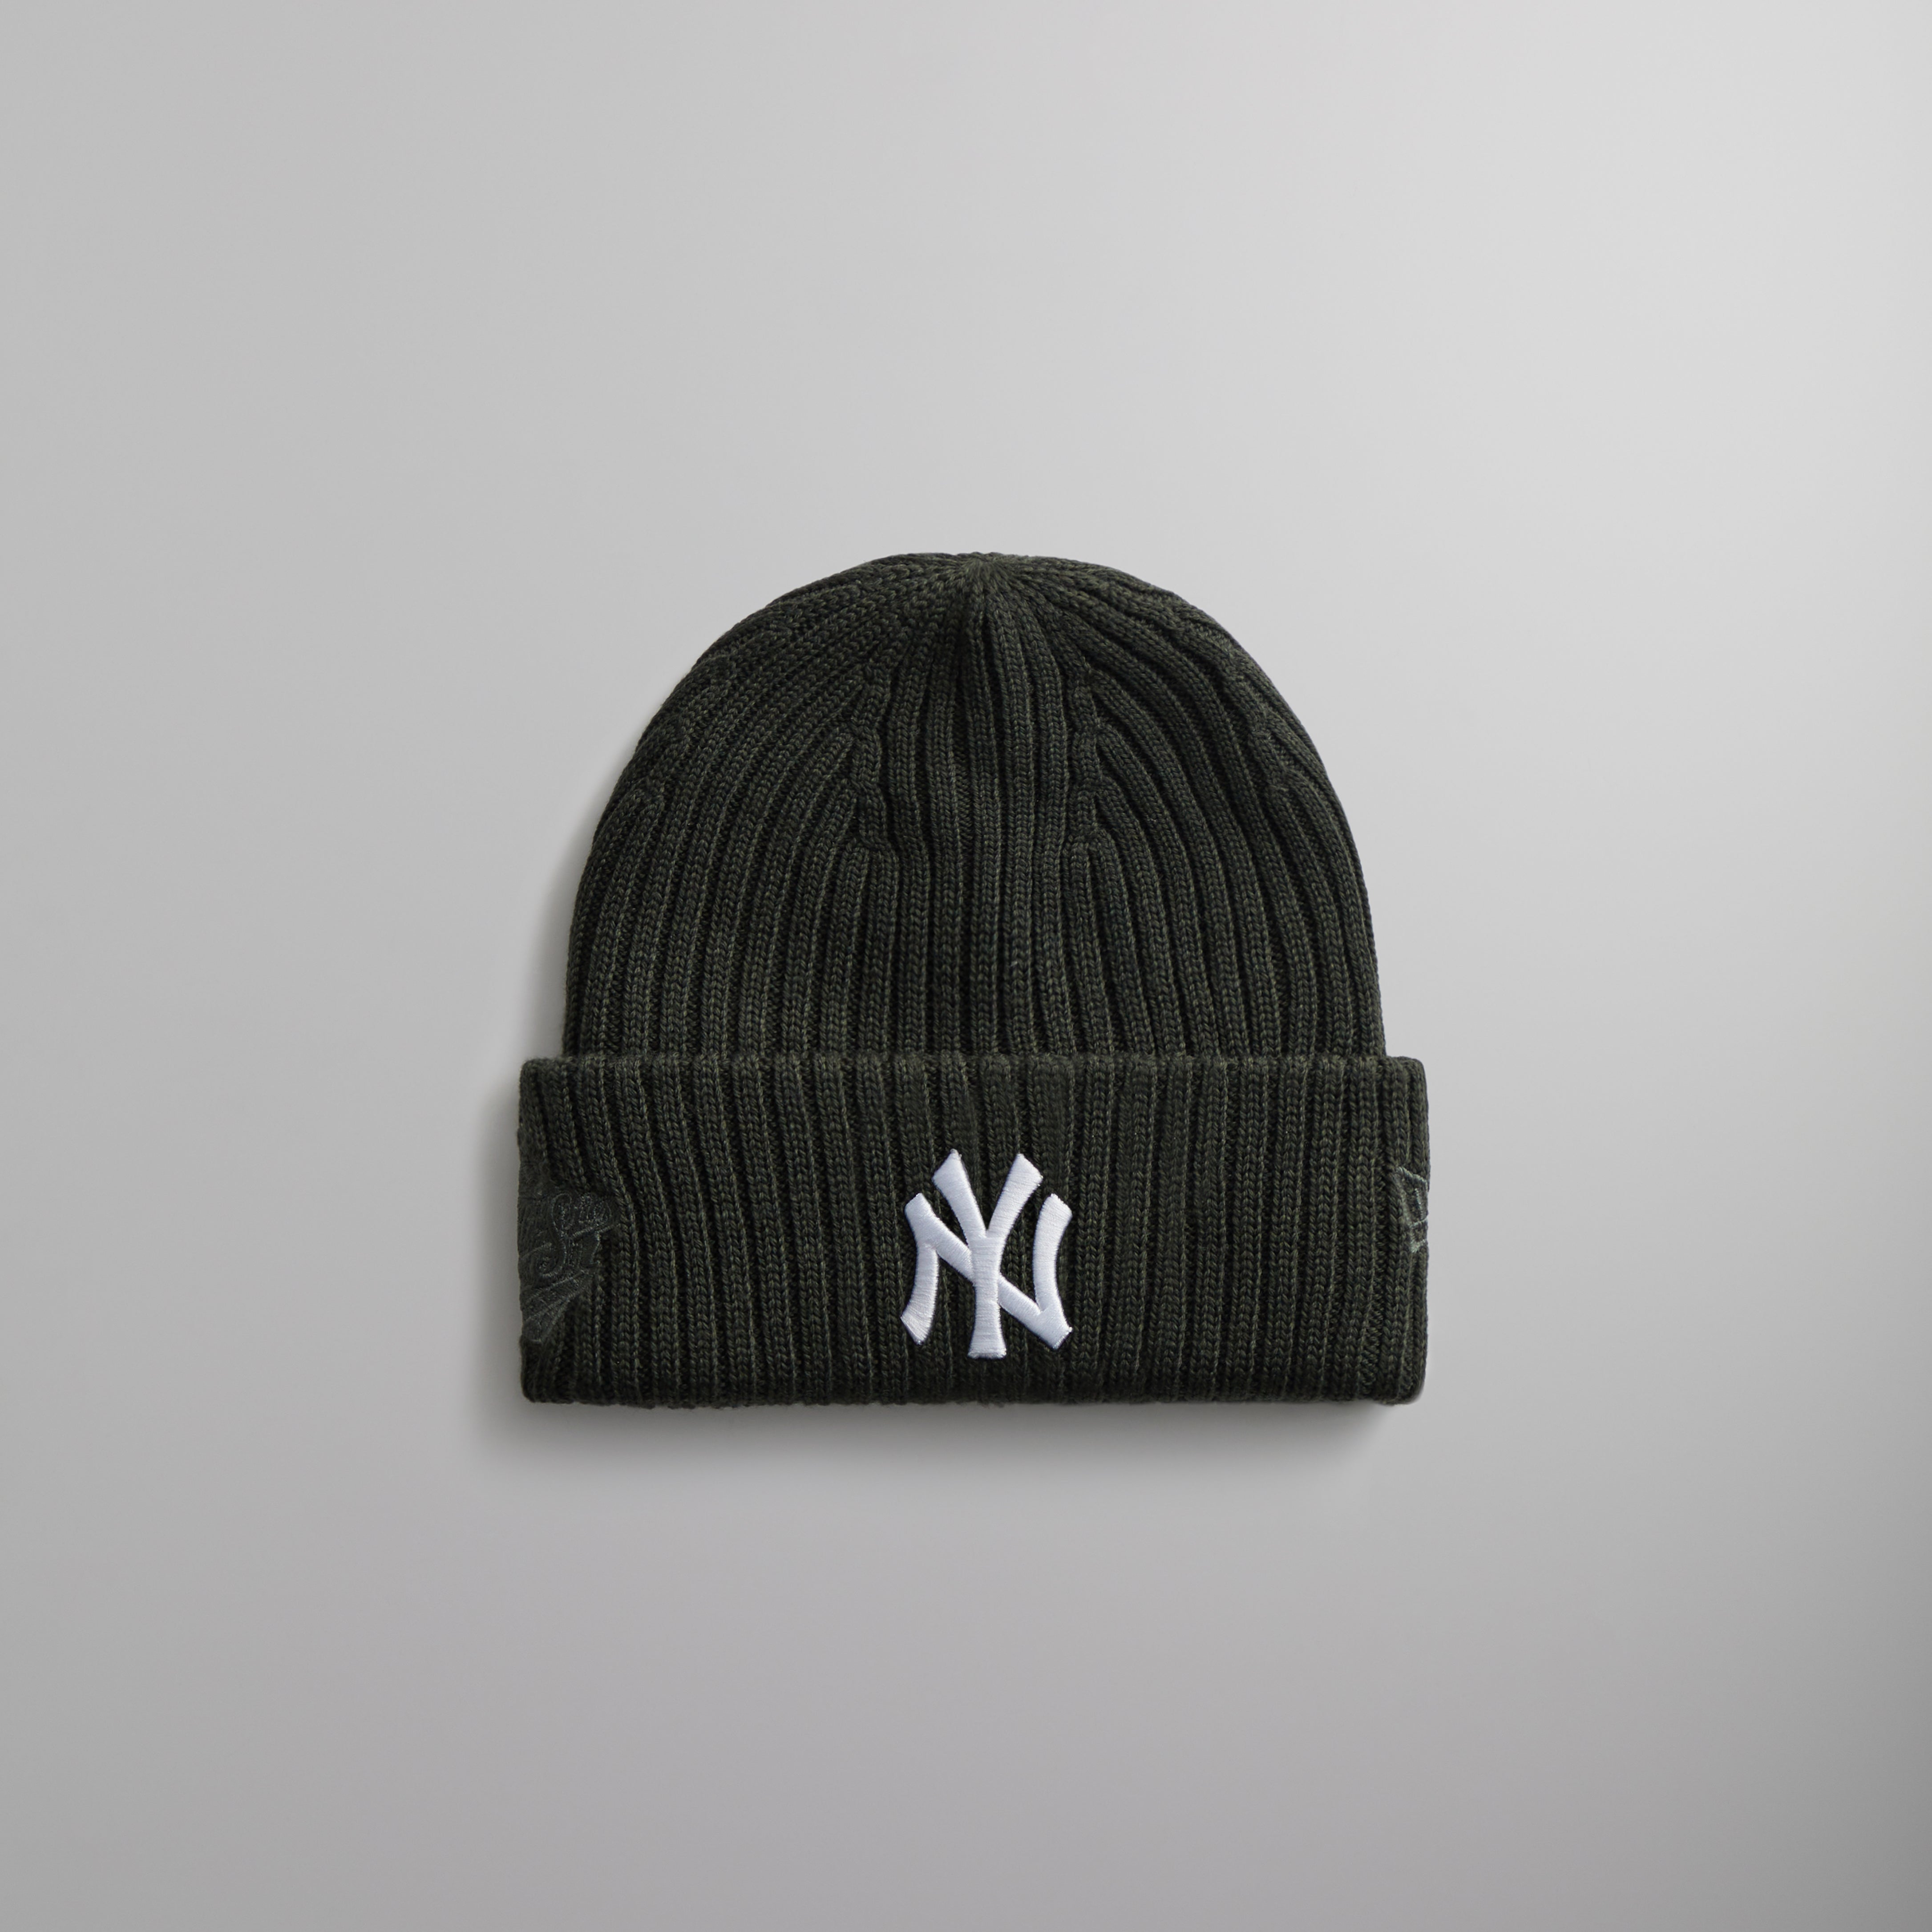 Kith u0026 New Era for the New York Yankees Knit Beanie - Stadium